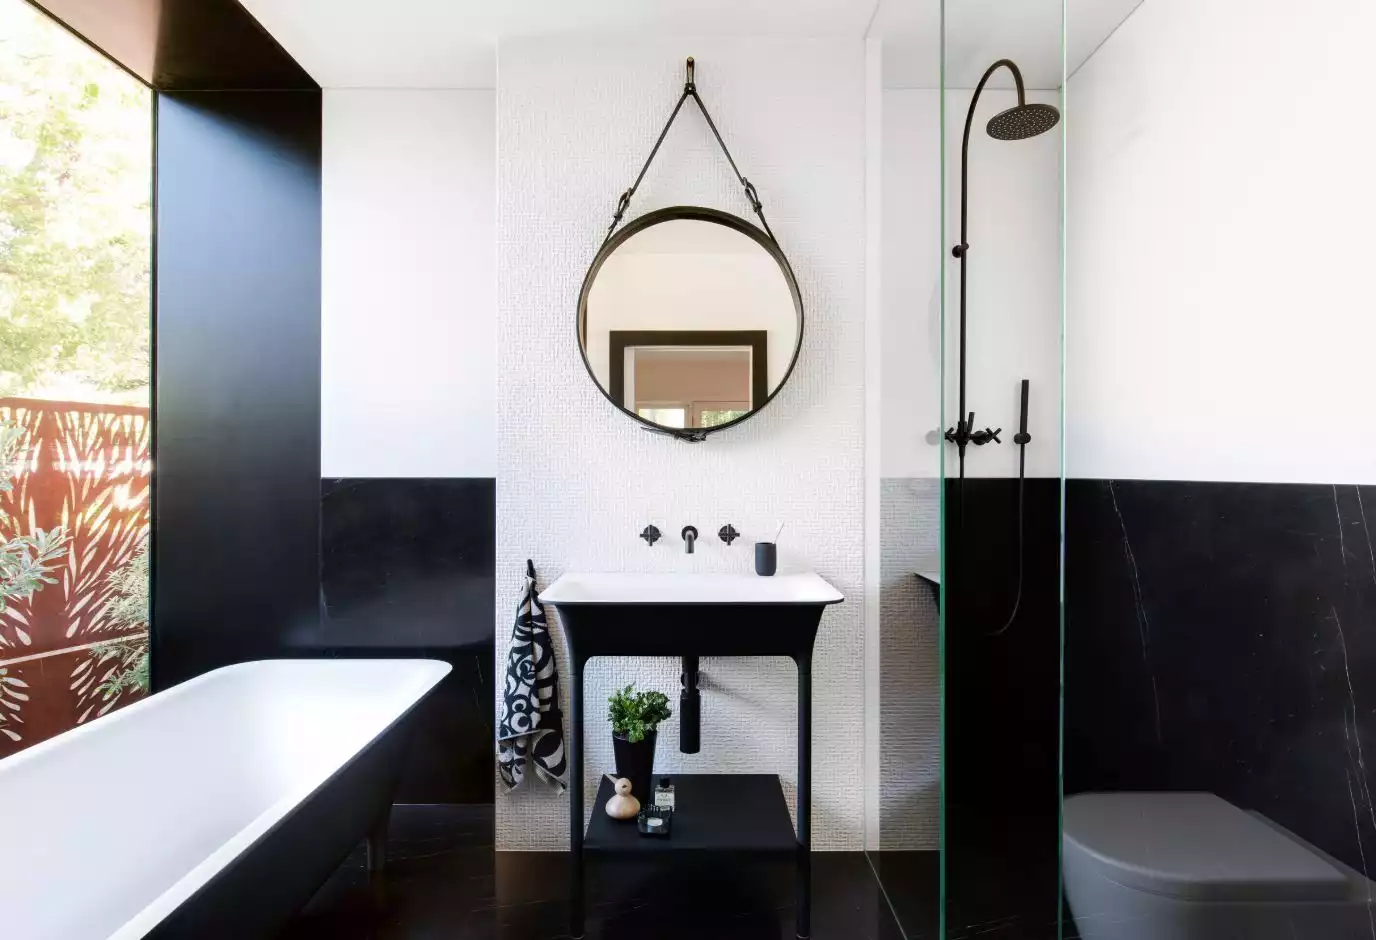 Simple black and white bathroom decor